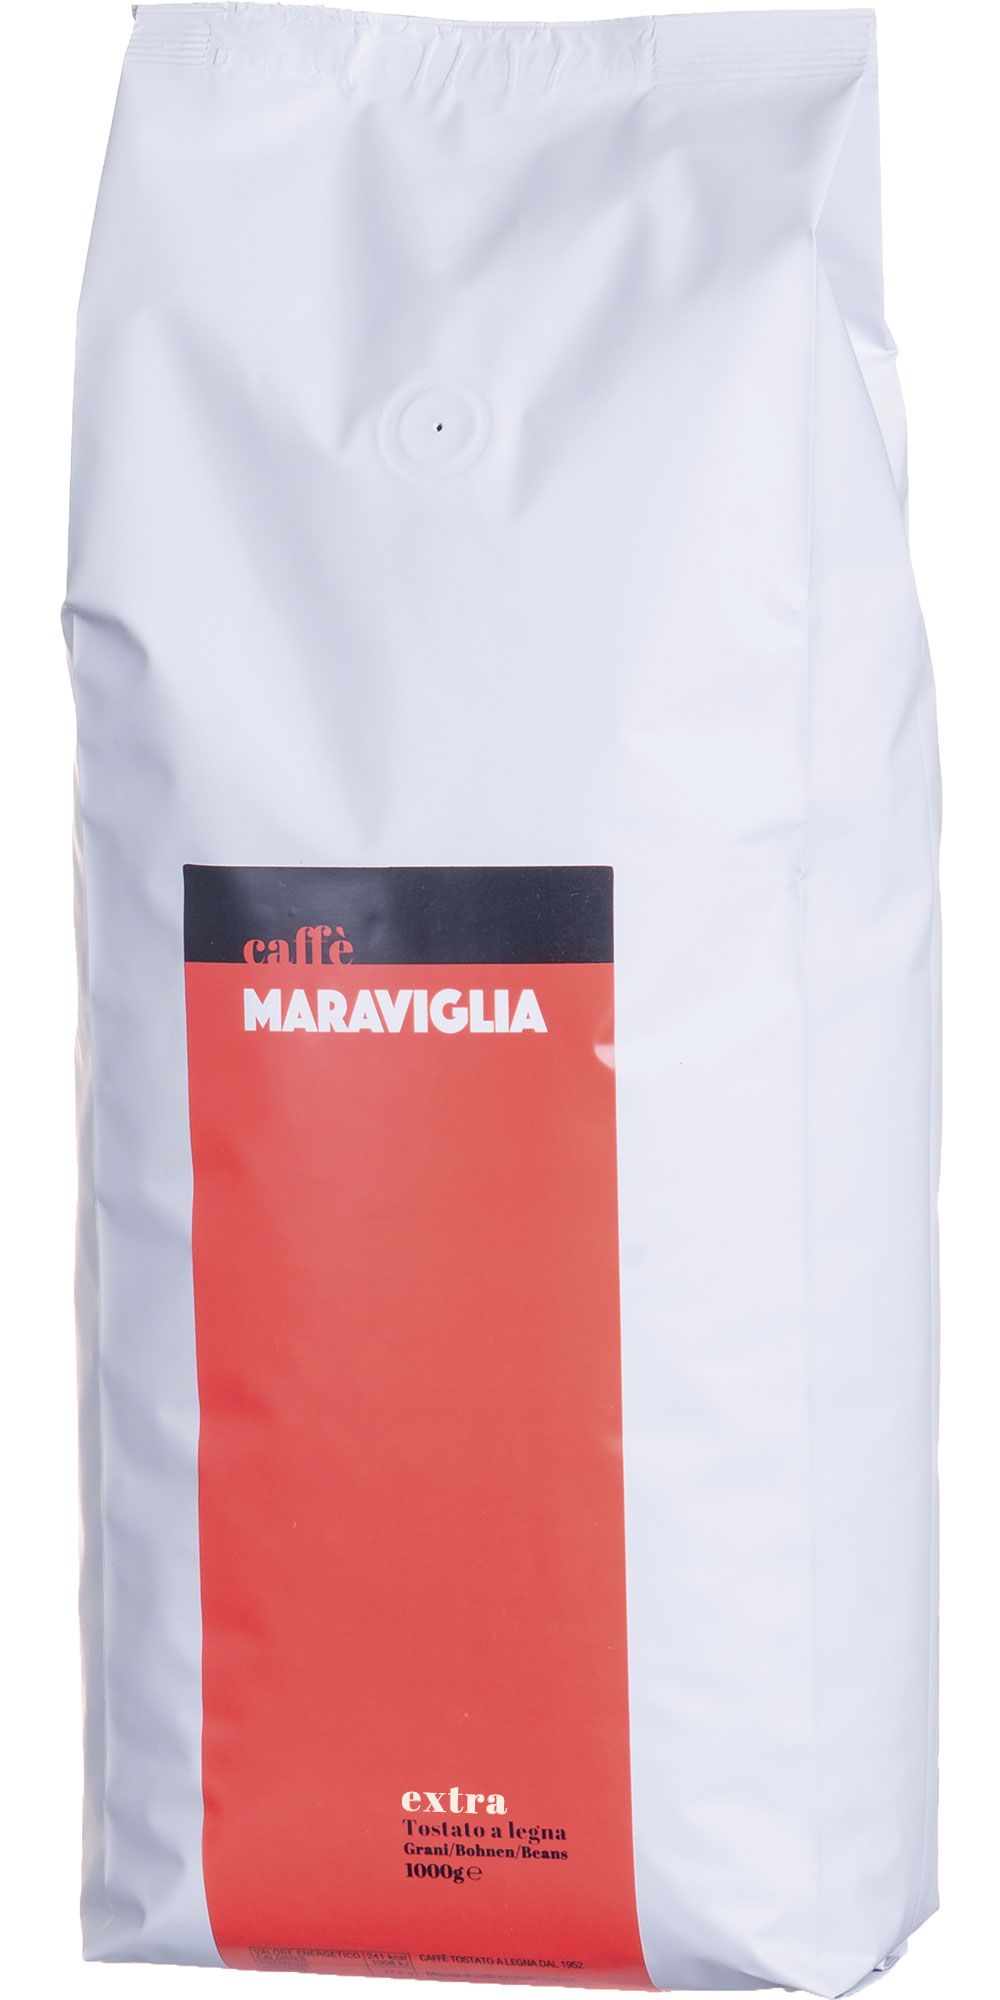 Caffè MARAVIGLIA – extra